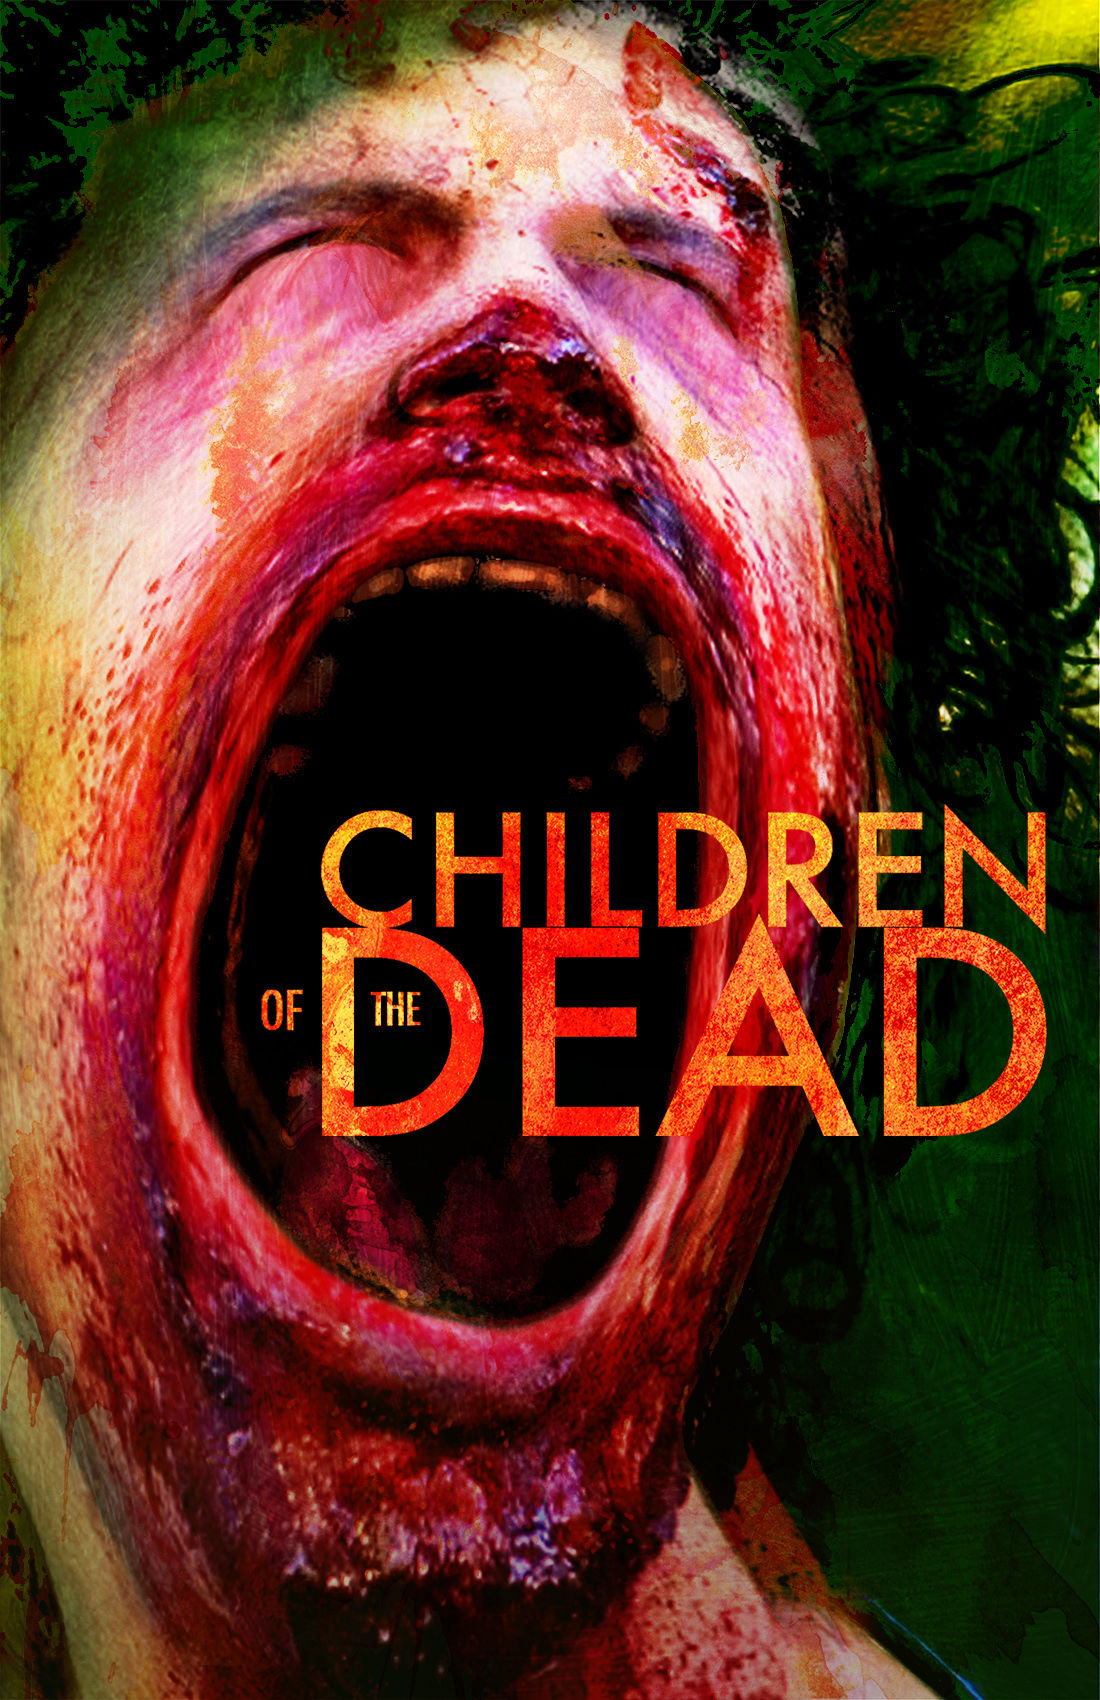 CHILDREN OF THE DEAD